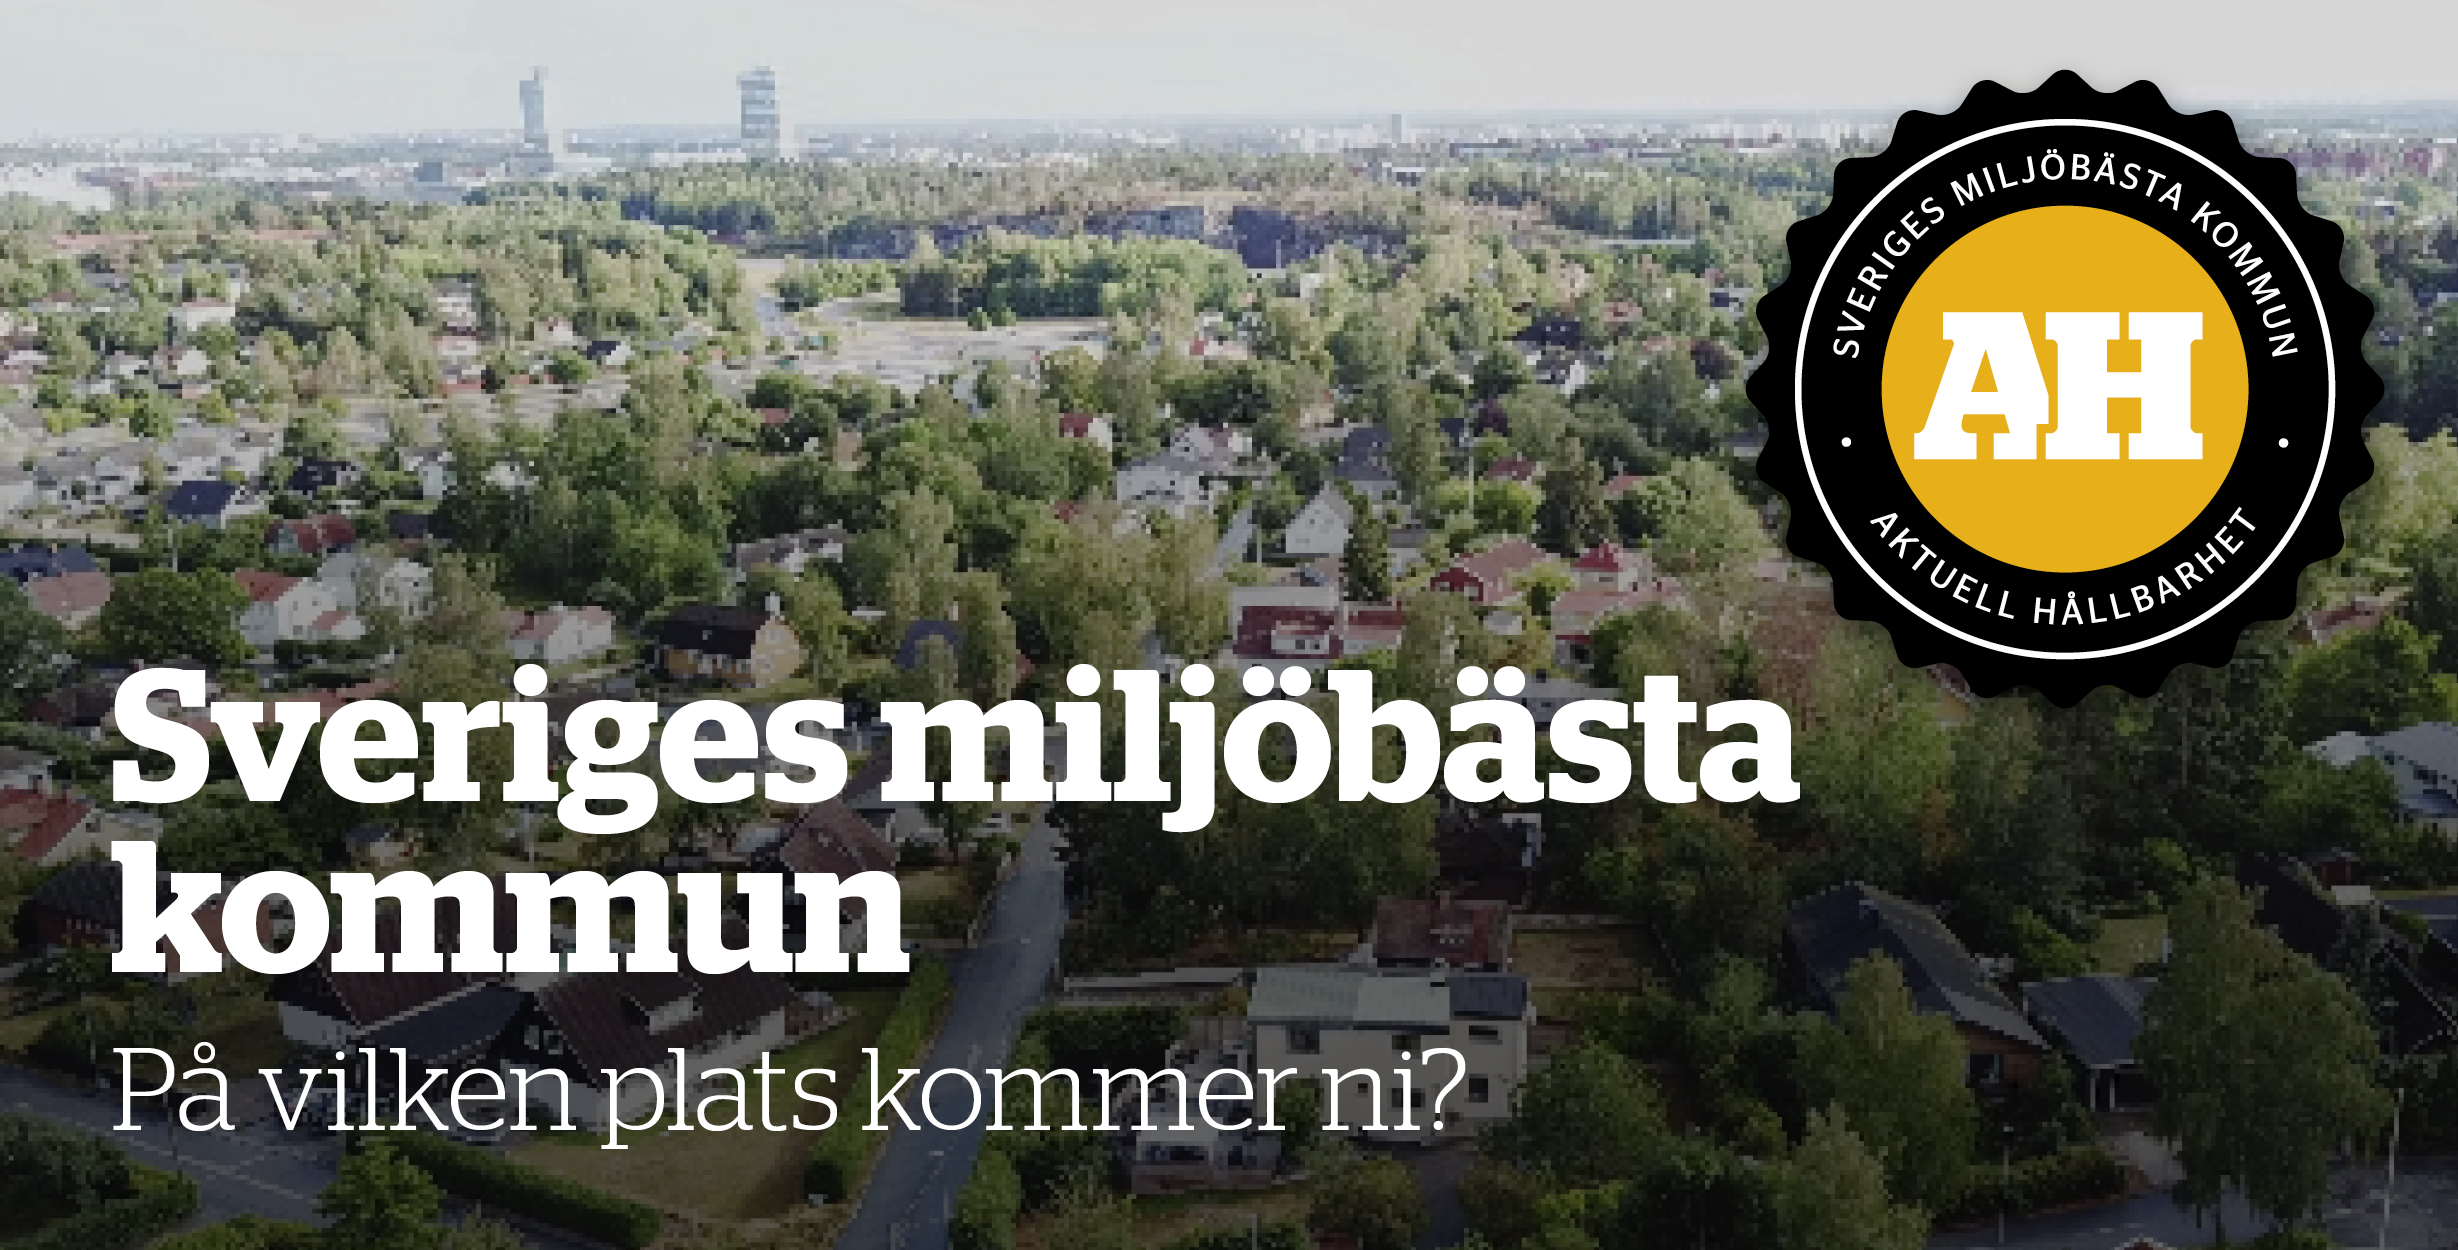 Sveriges miljöbästa kommun - Aktuell hållbarhet